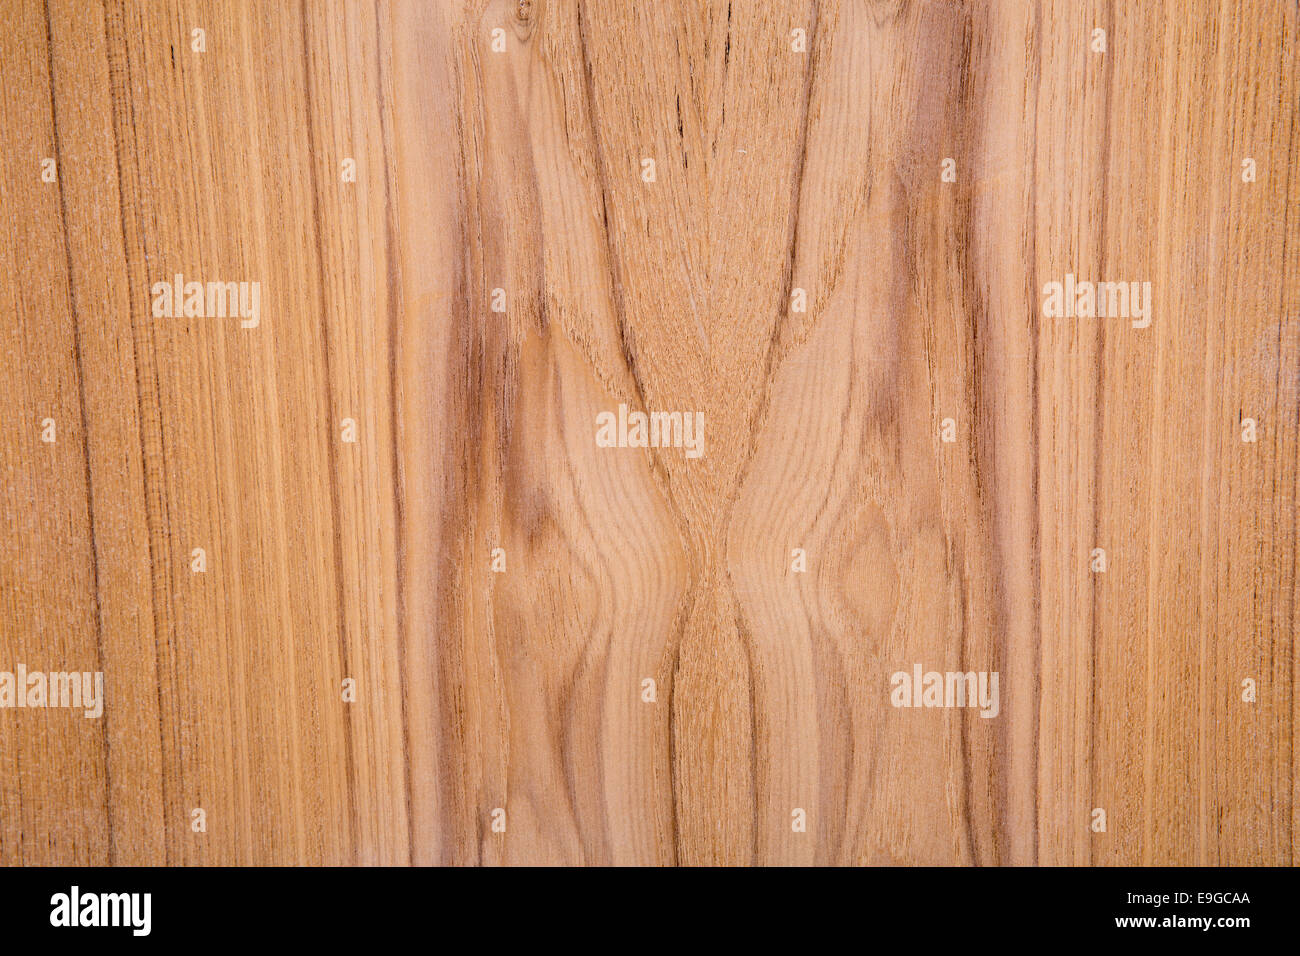 La textura natural de la madera de teca como fondo Foto de stock